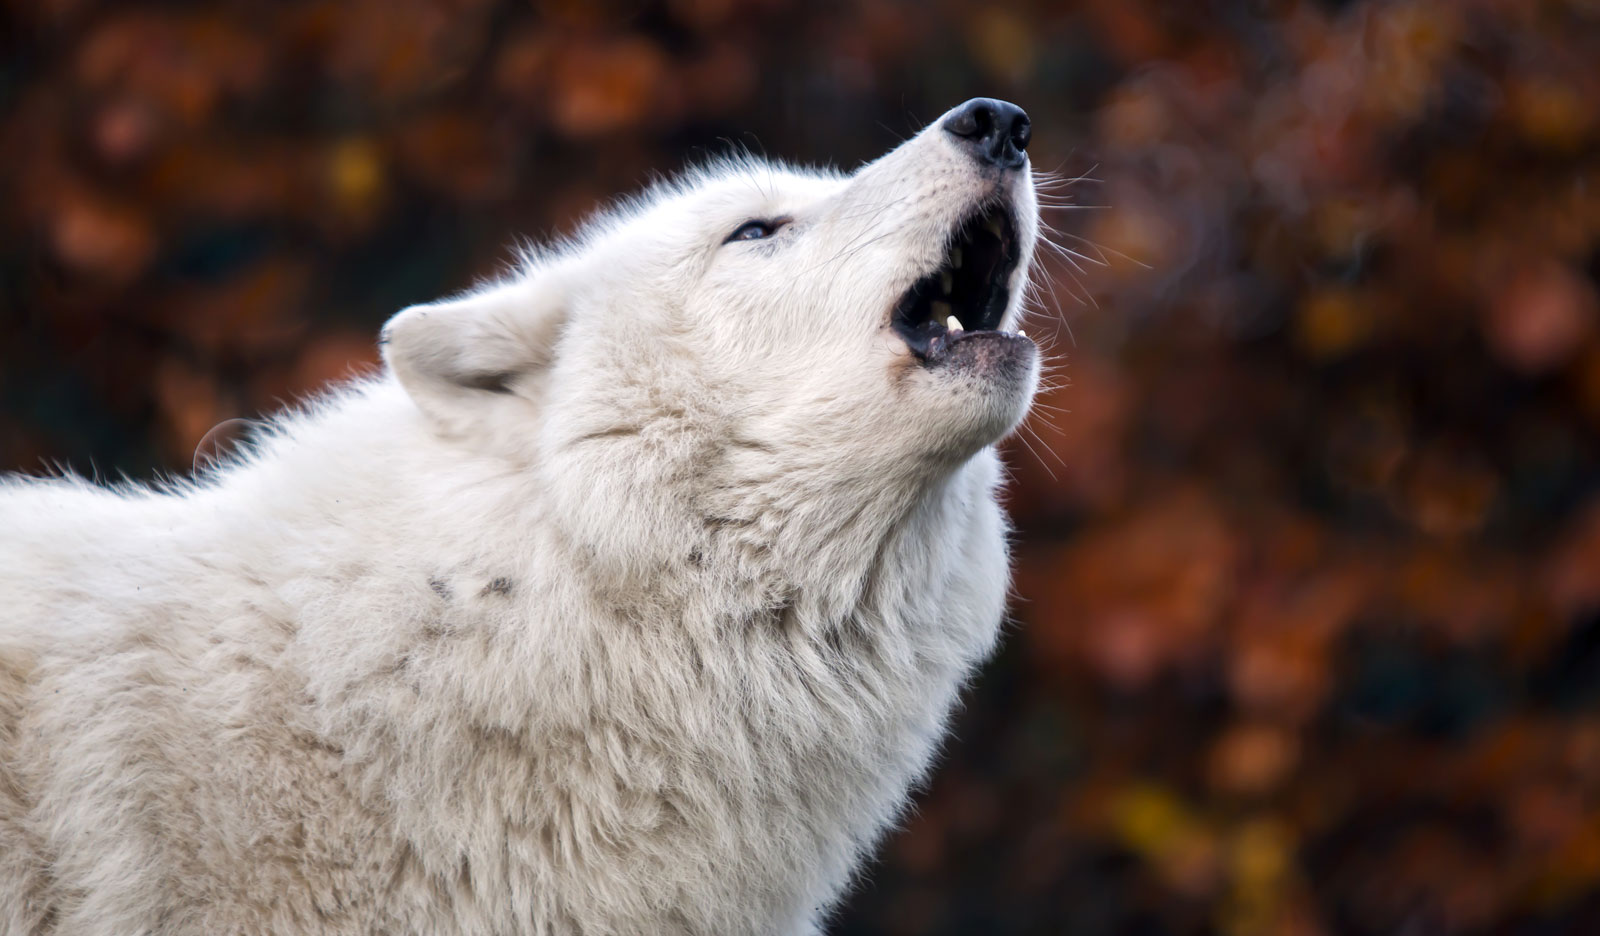 white wolf symbolism